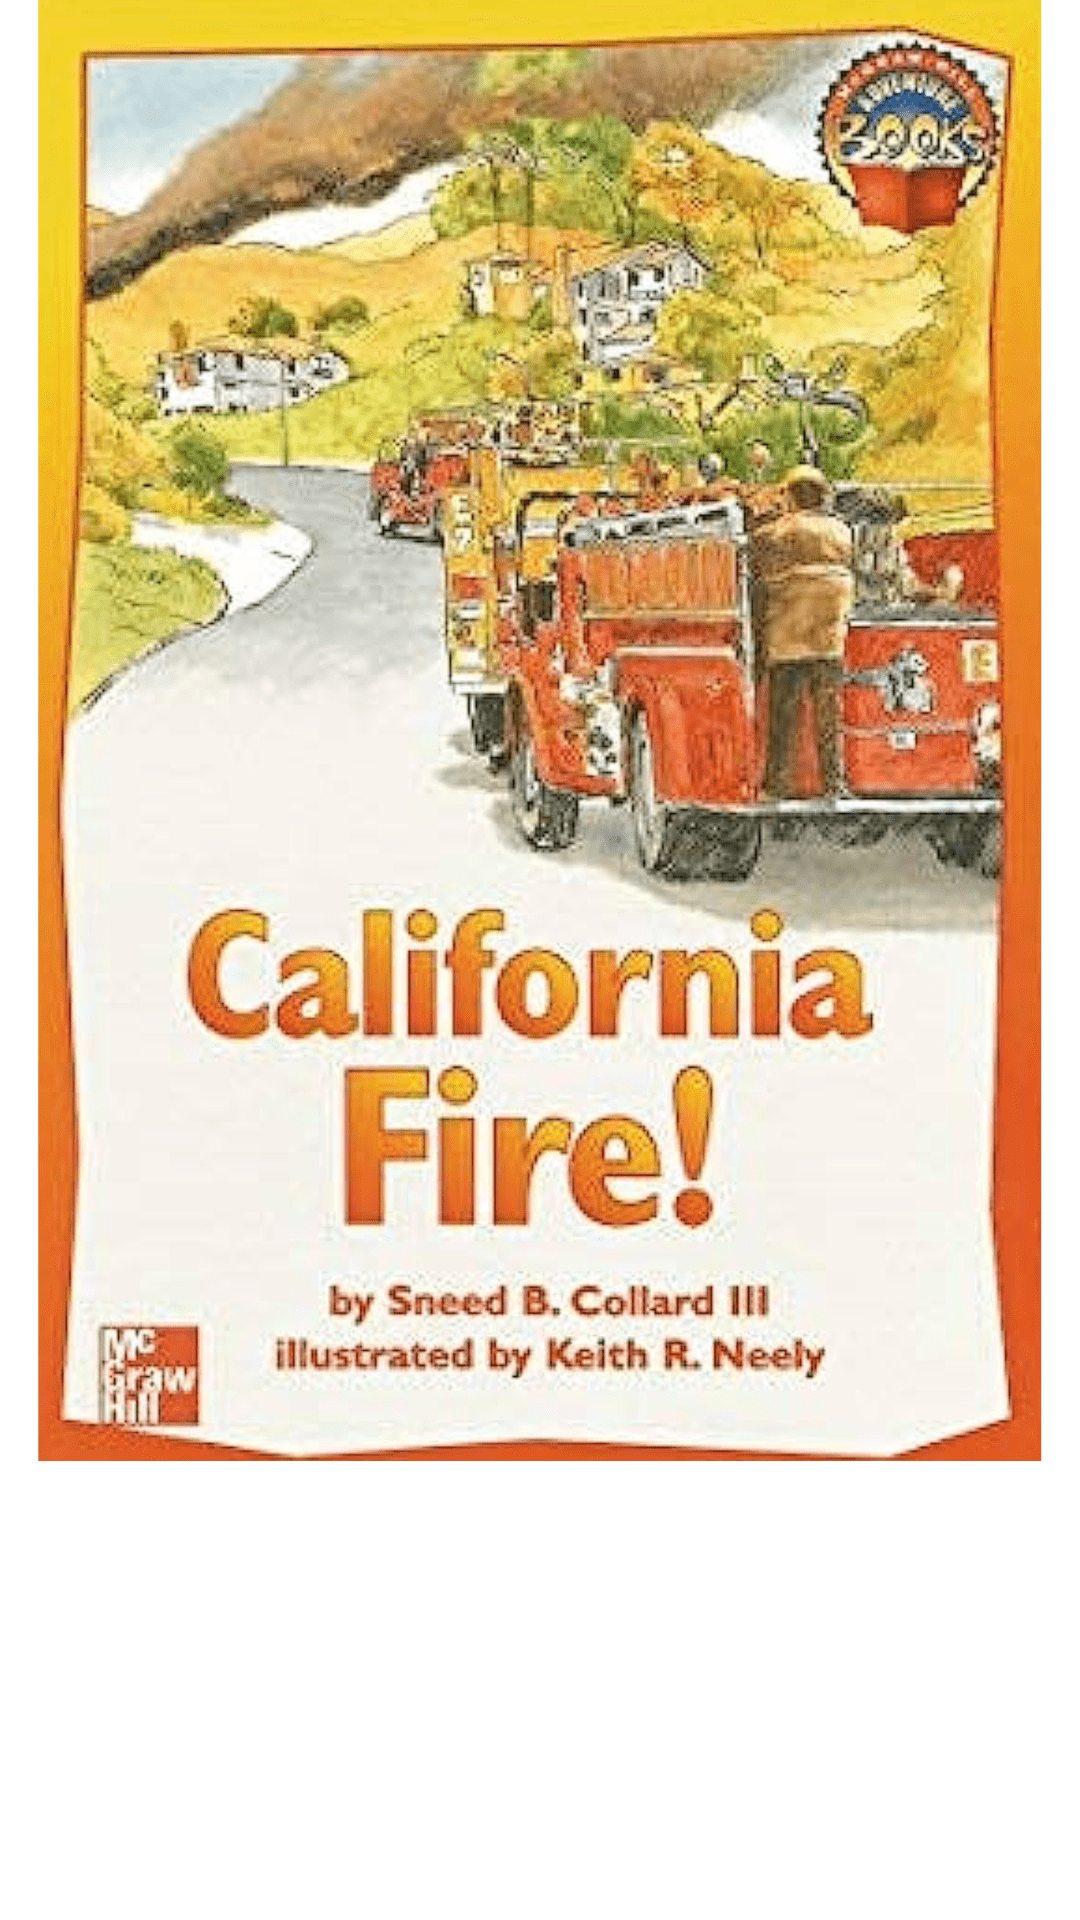 California Fire! by Sneed B. Collard